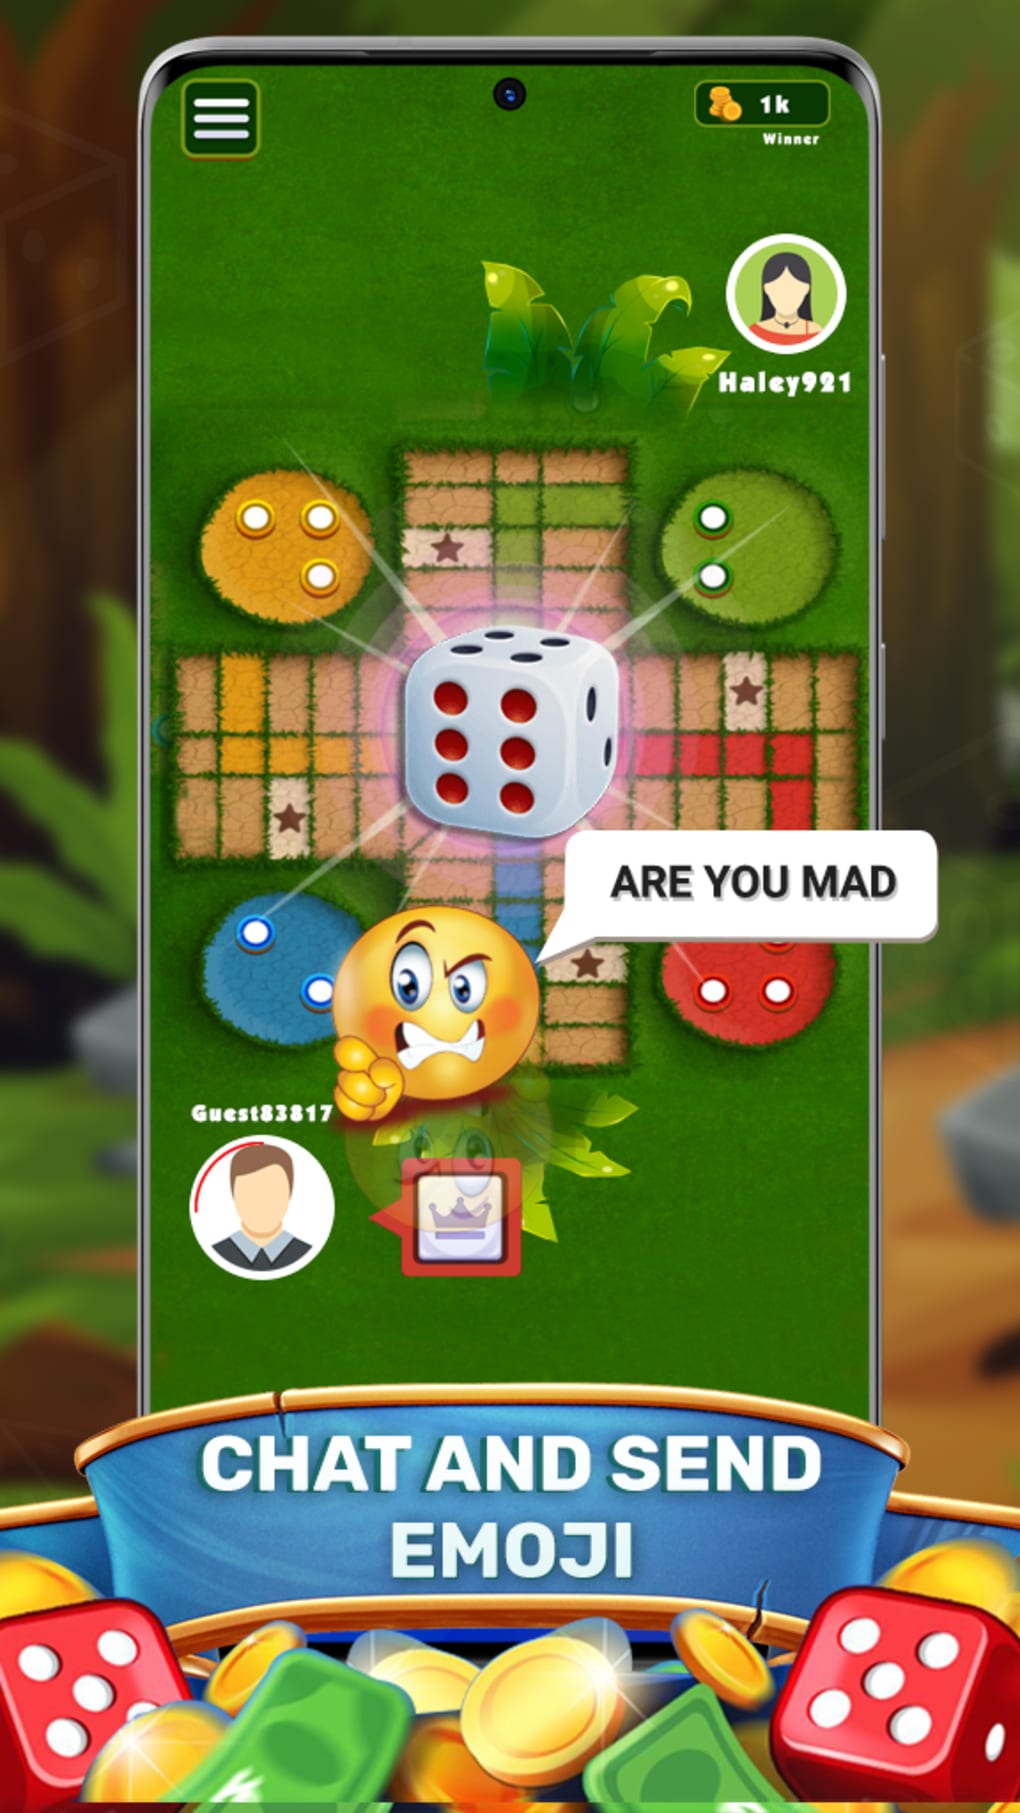 Hello Ludo Online Ludo Game - Yoyo lado live lodo para Android